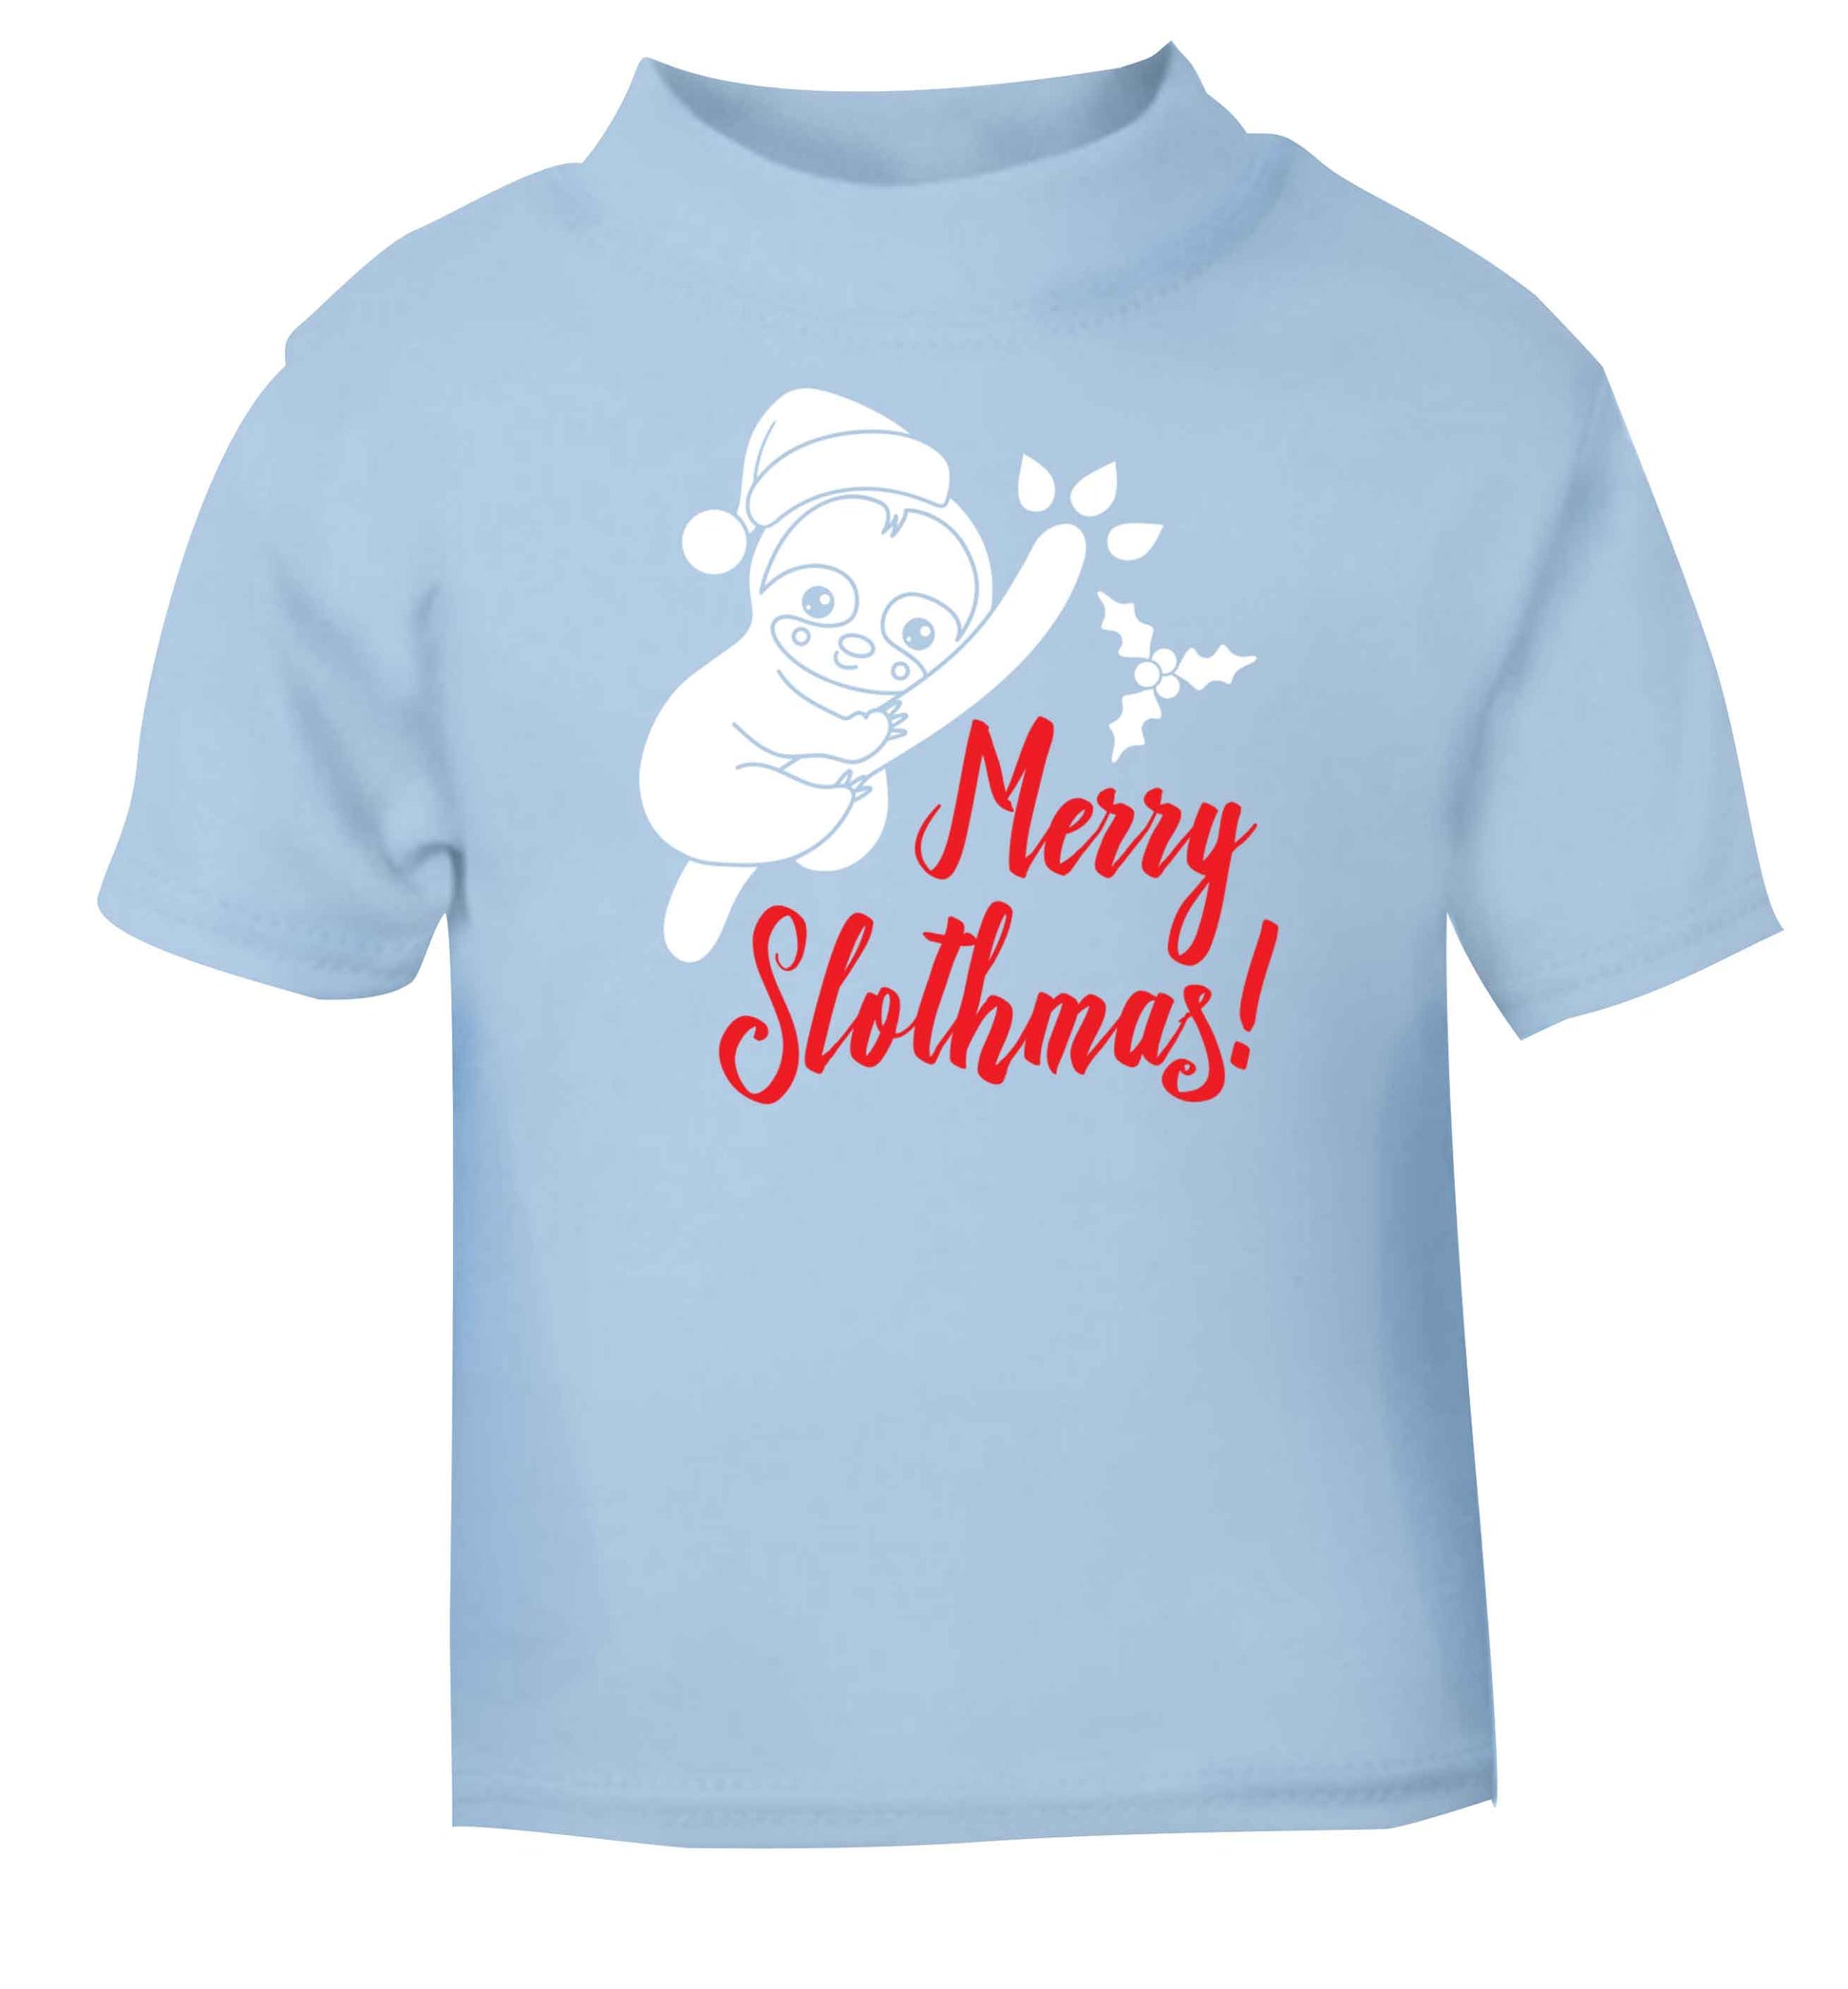 Merry Slothmas light blue baby toddler Tshirt 2 Years